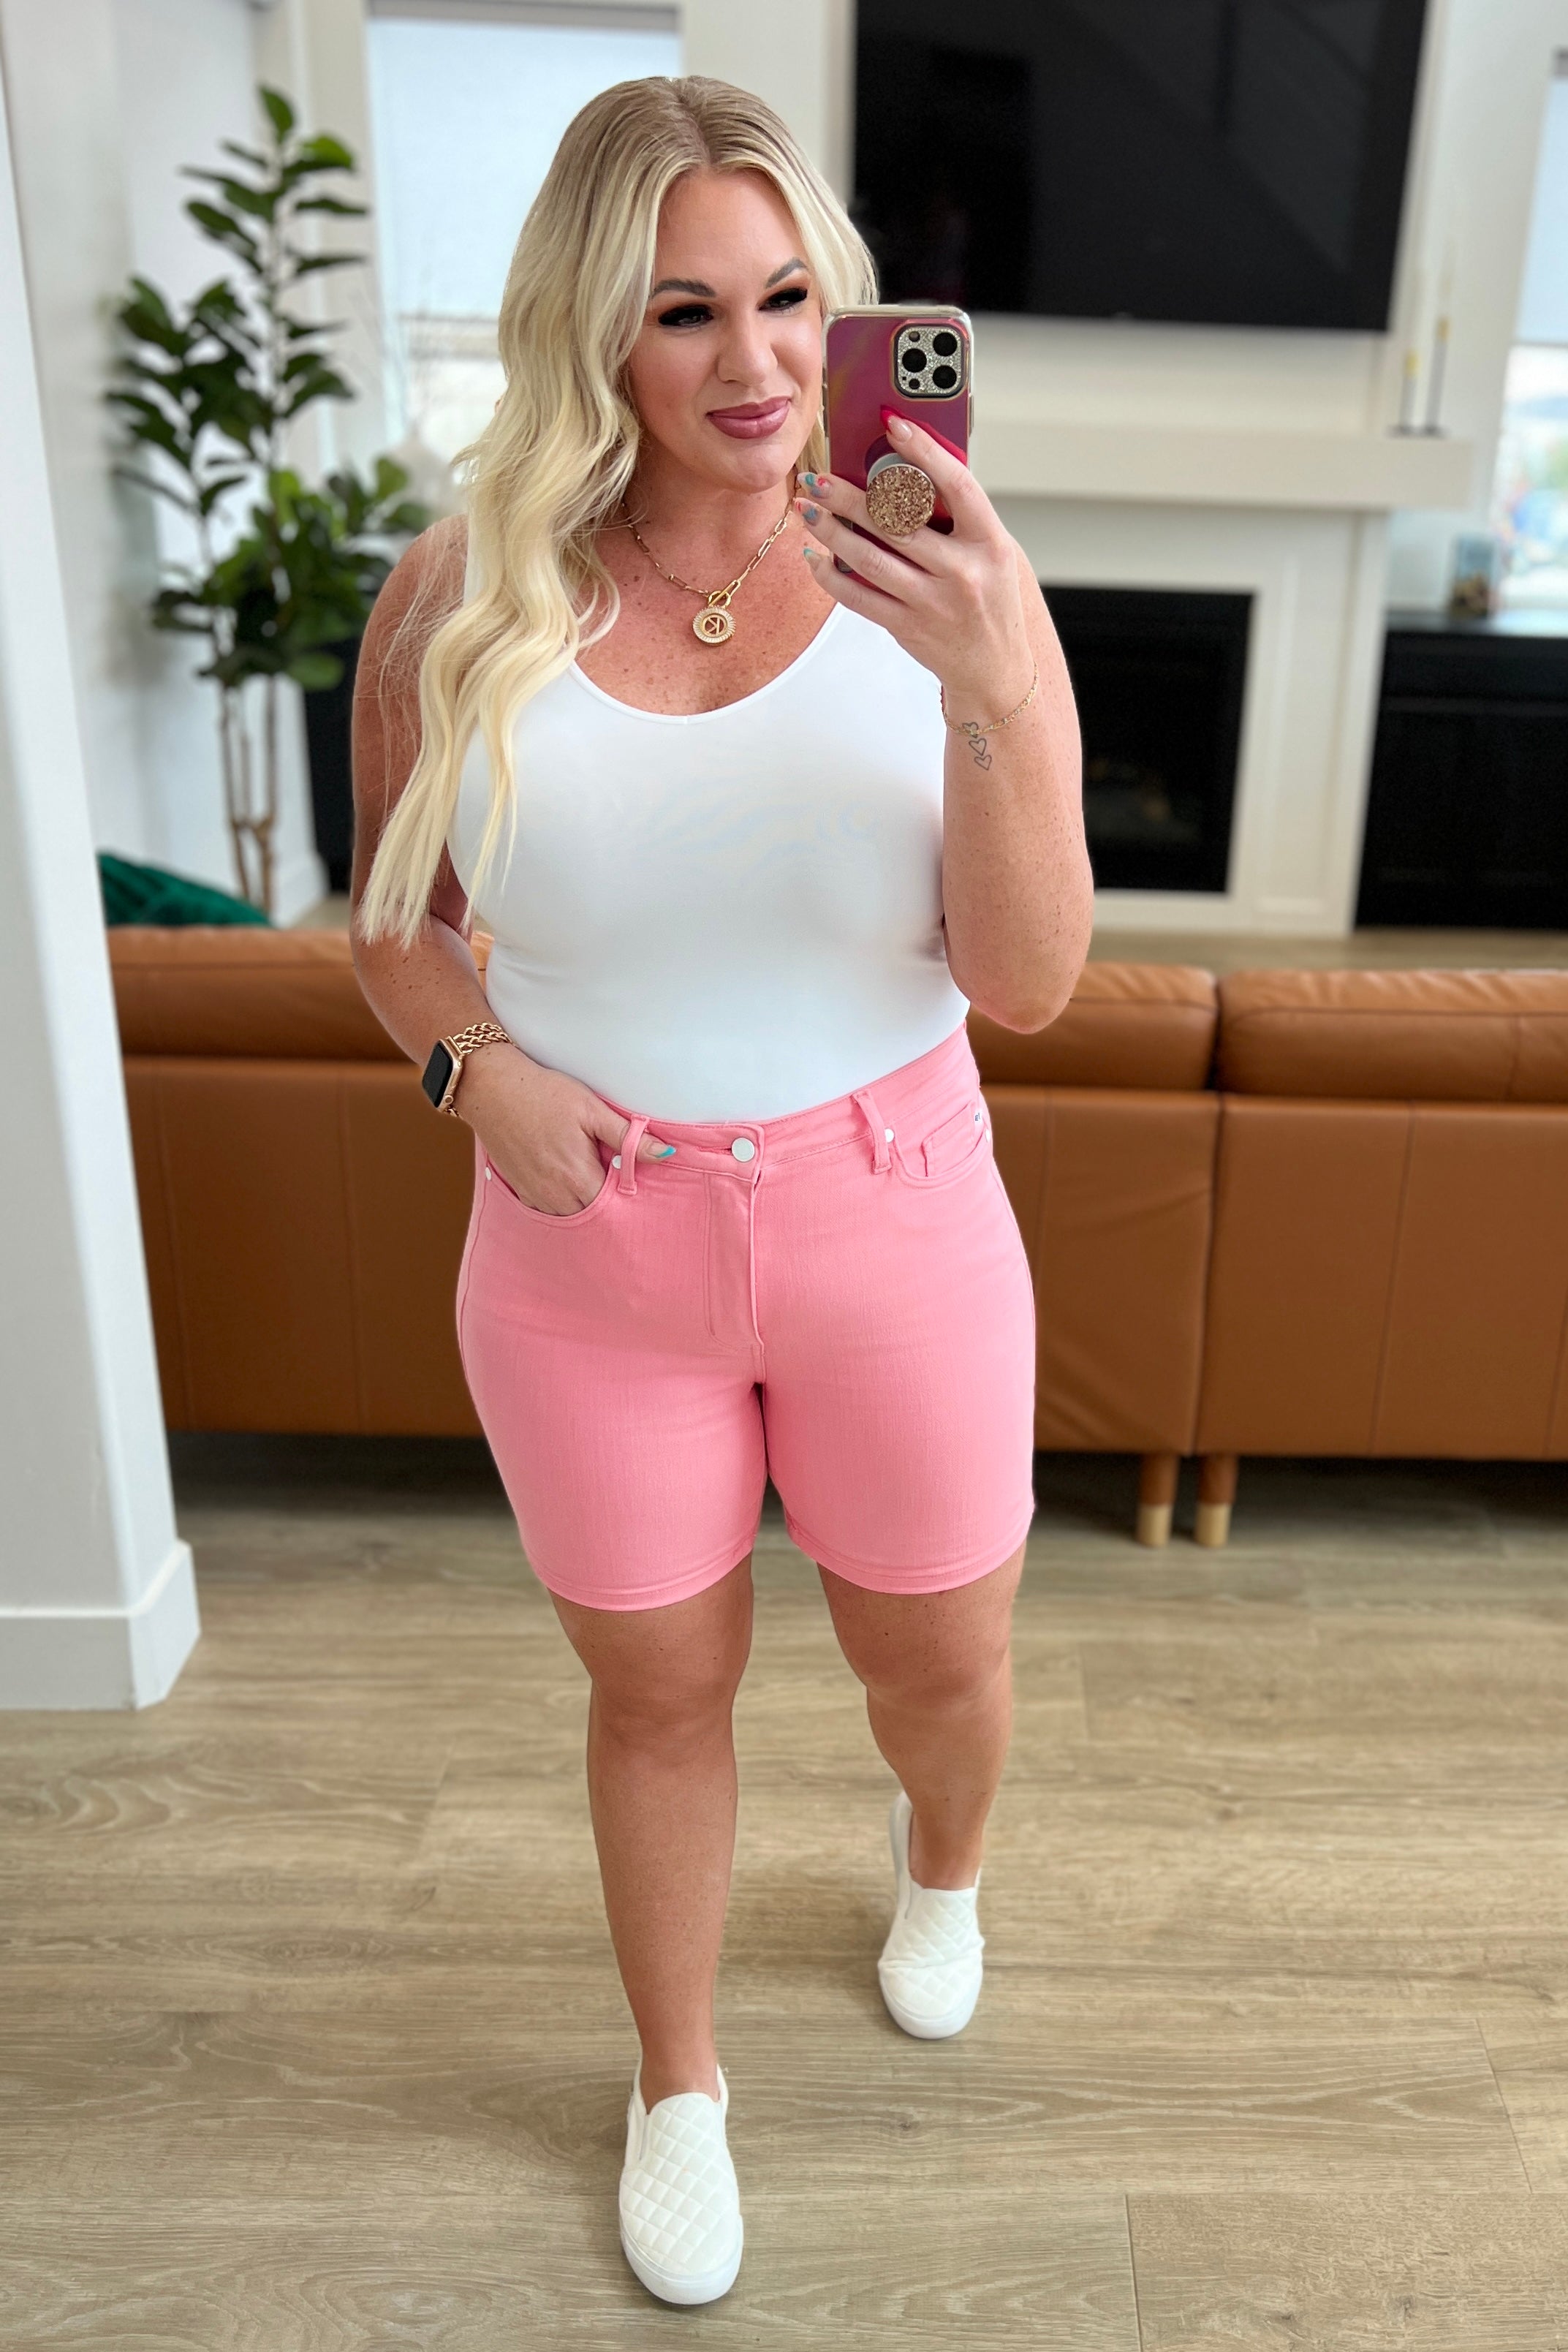 Jenna High Rise Control Top Cuffed Shorts in Pink (Judy Blue)